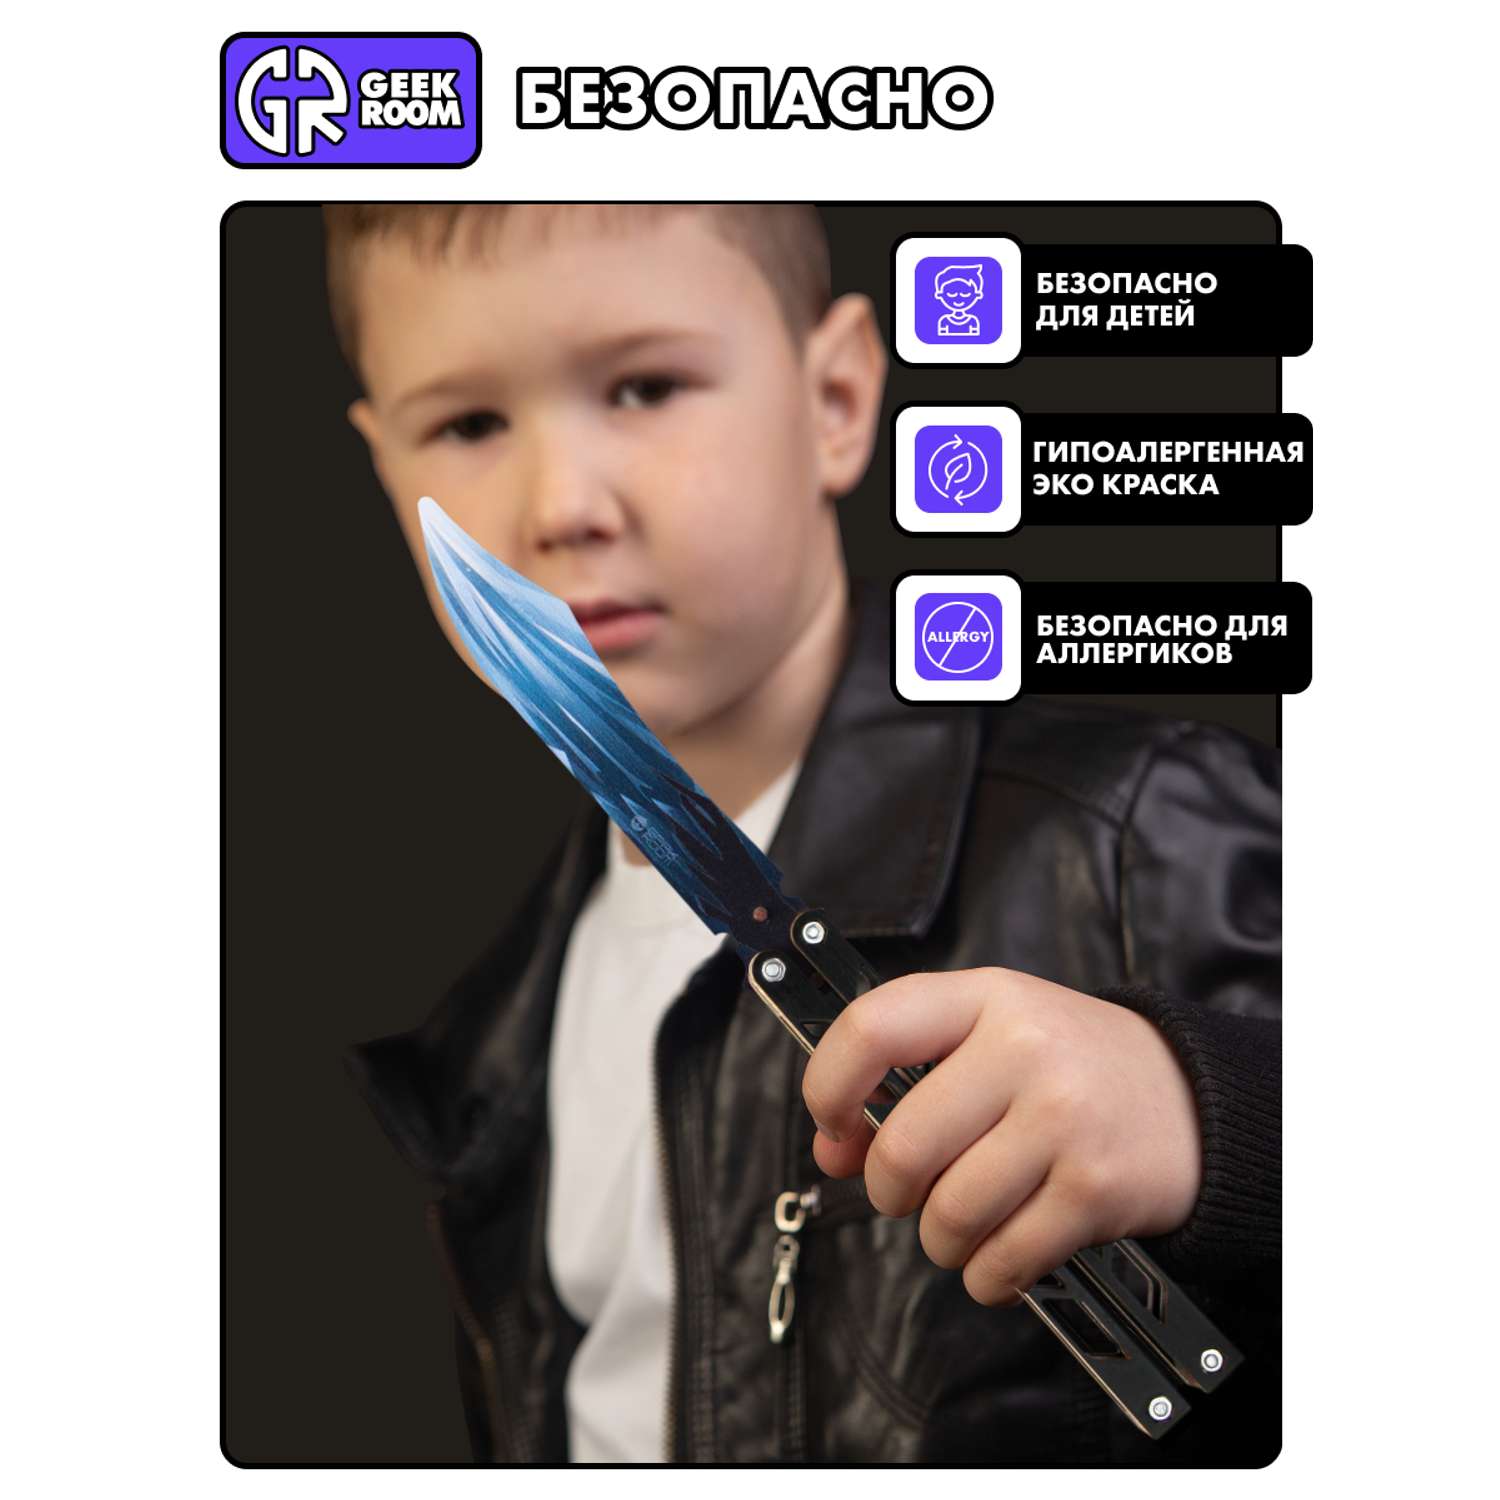 Набор деревянного оружия GEEKROOM нож бабочка Dragon glass керамбит Scratch штык М9 байонет Digital burst. - фото 5